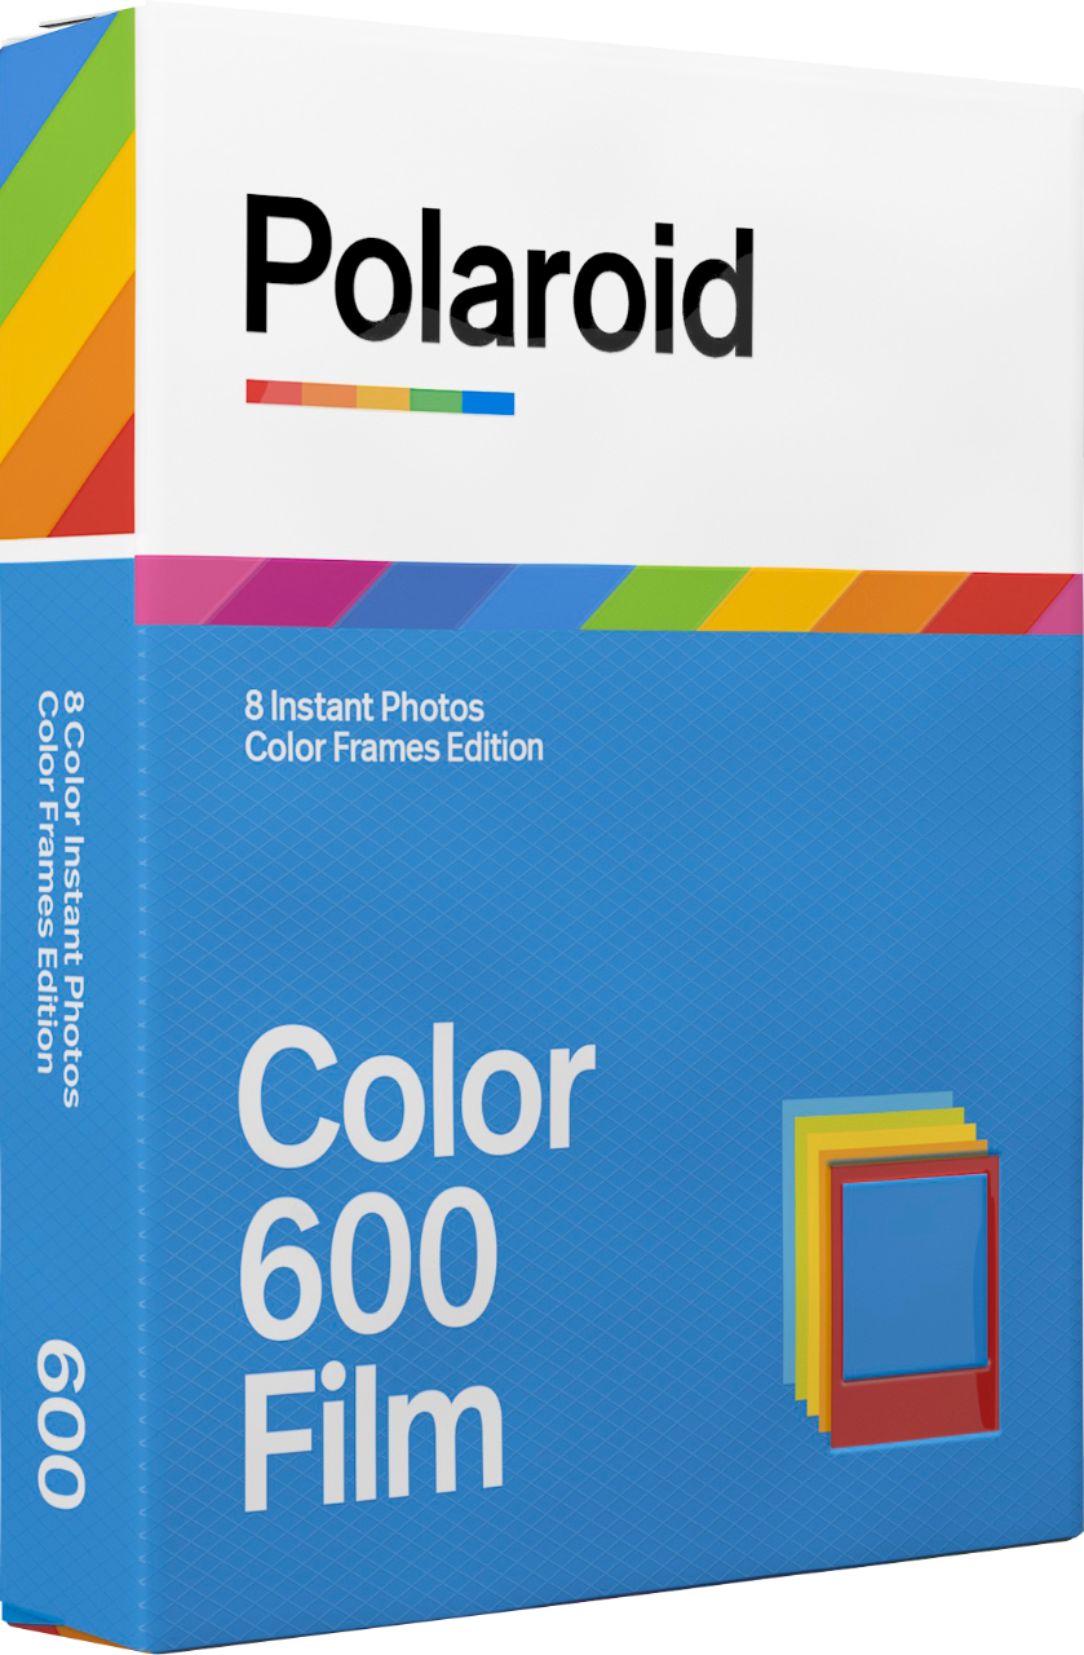 Polaroid - Color 600 Film - Color Frames